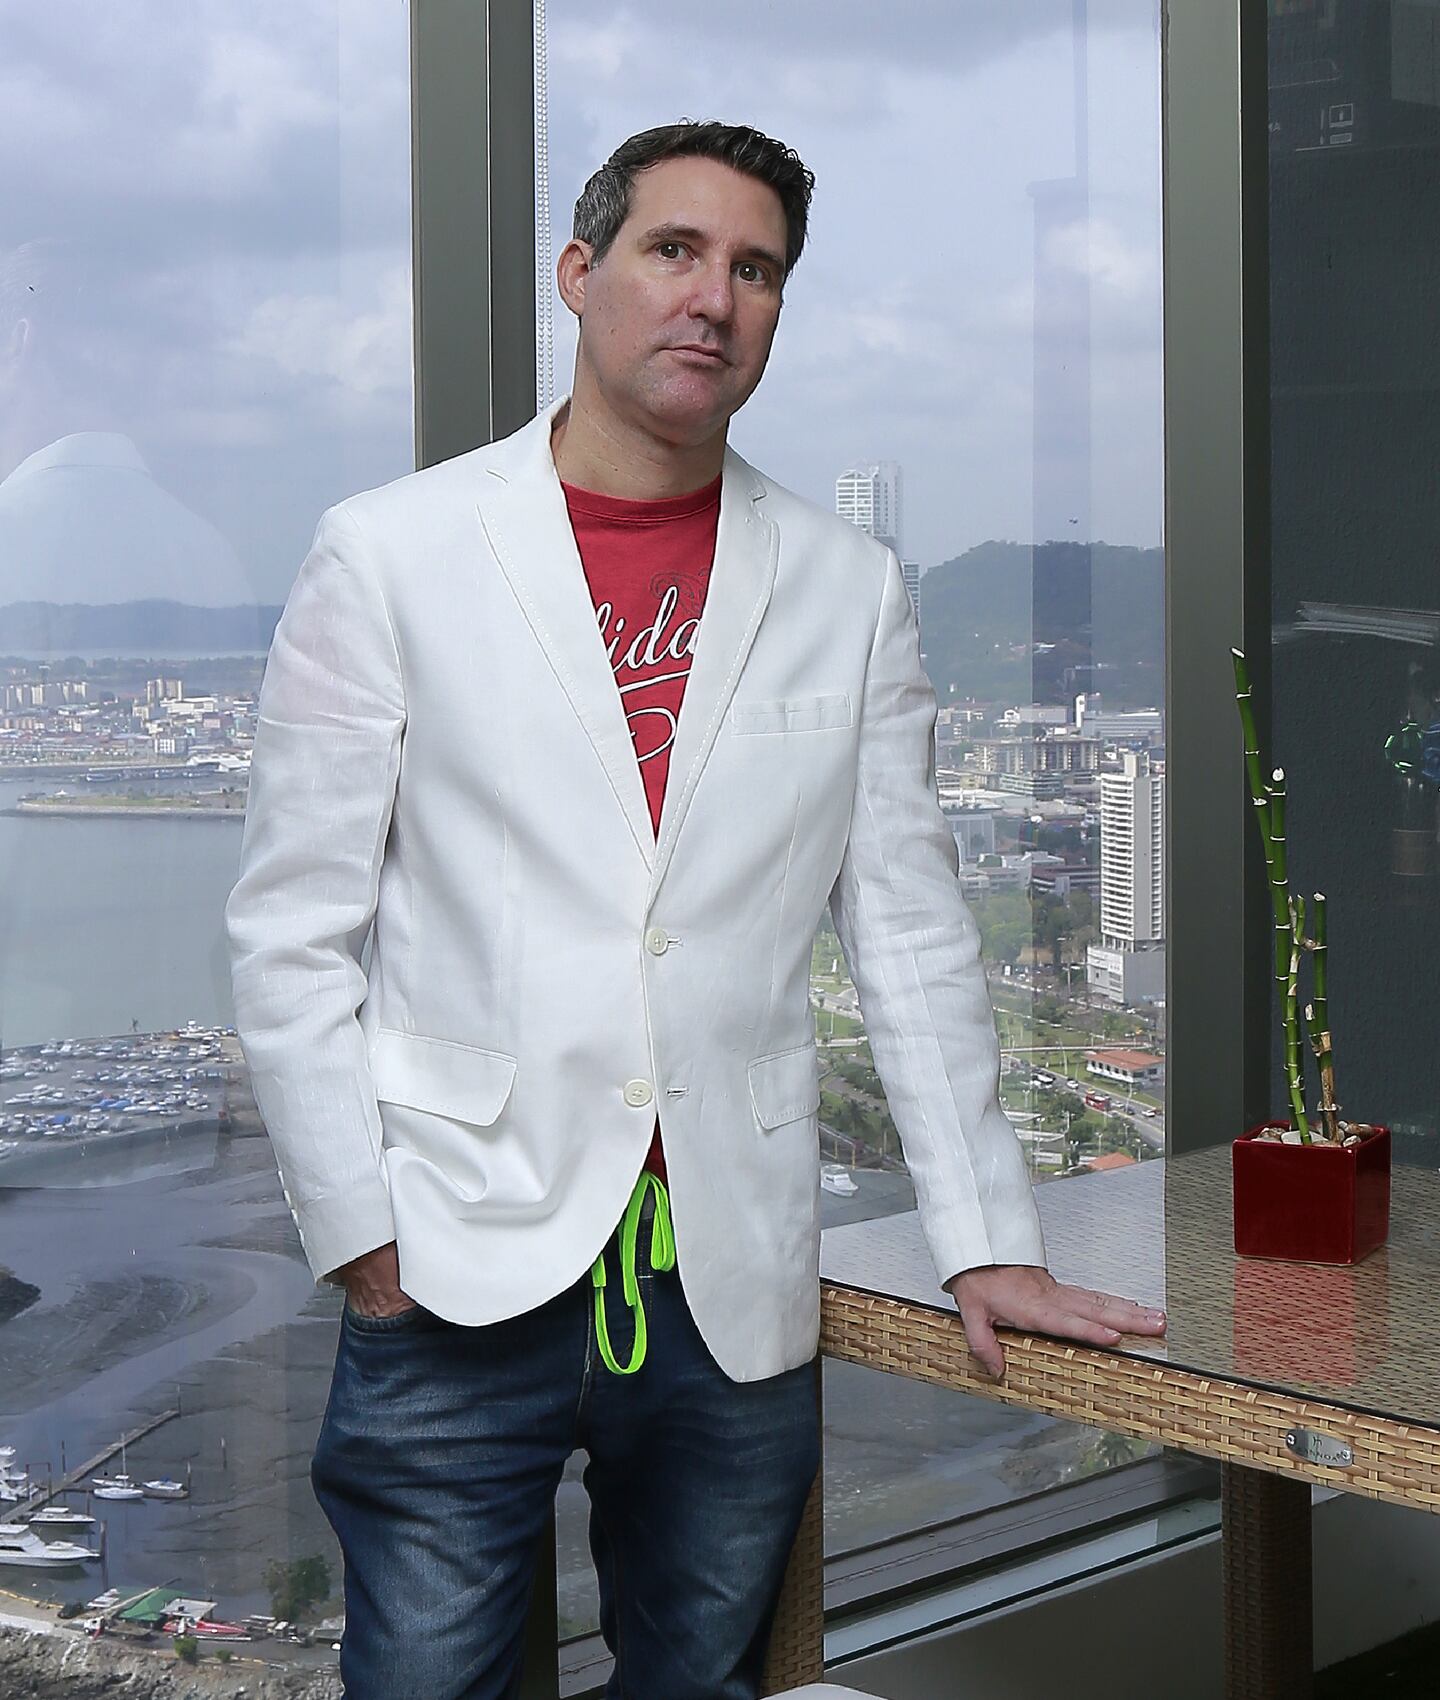 Founder of Panama Startups, a network of Panamanian entrepreneursdfd